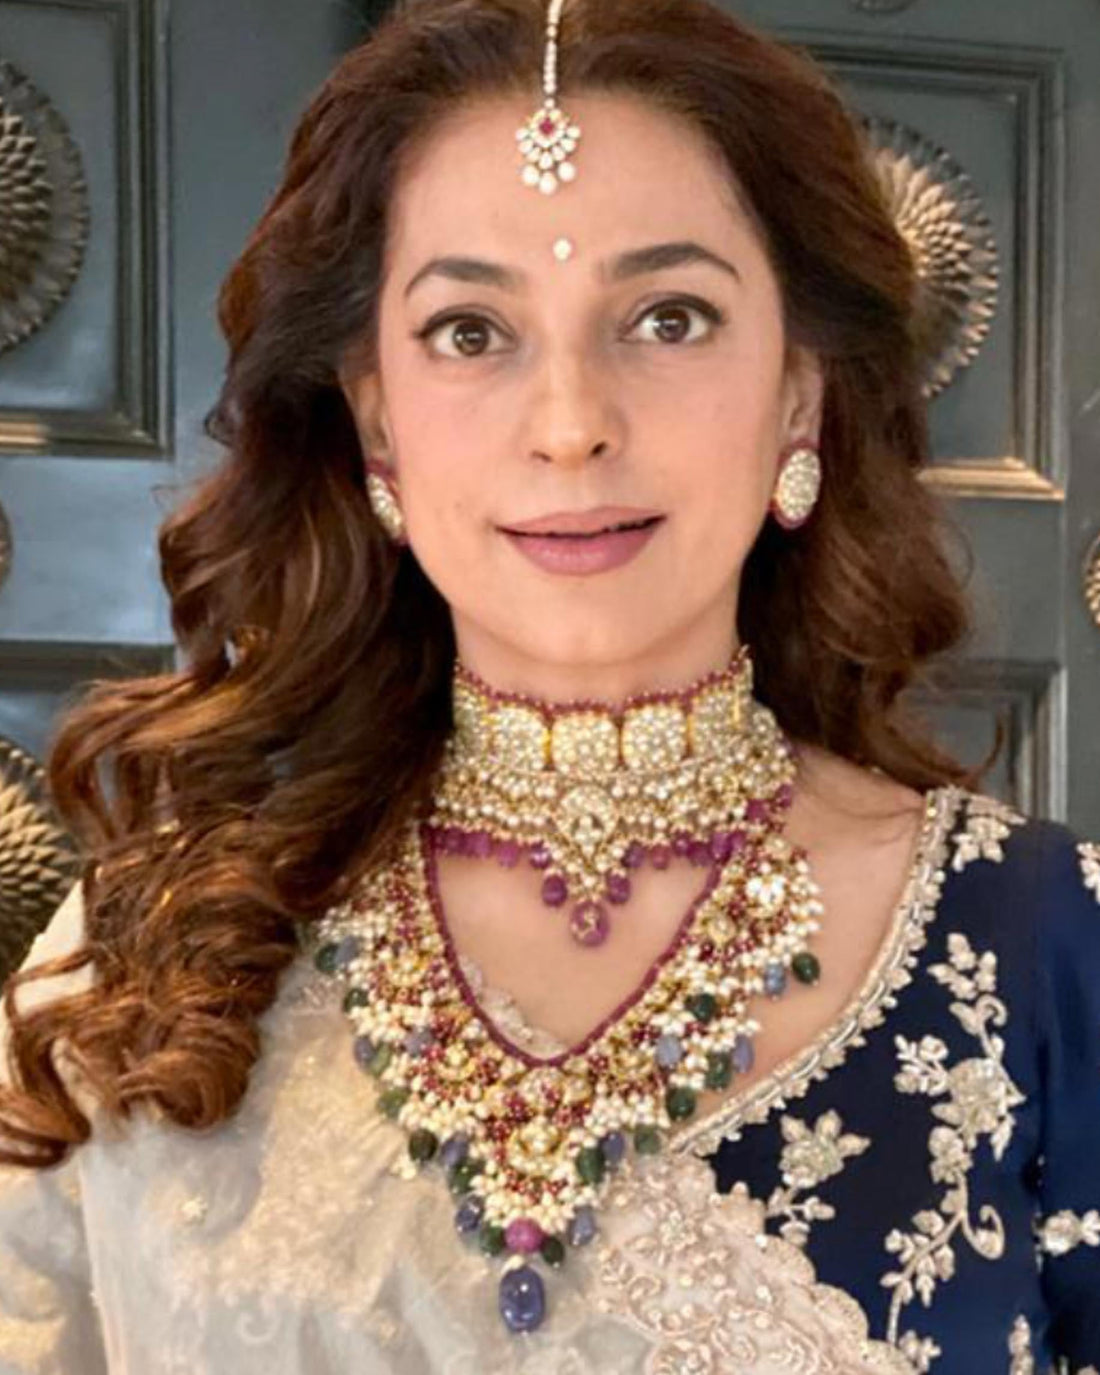 Sela Polki Long Necklace wore by Indian actress Juhi Chawla